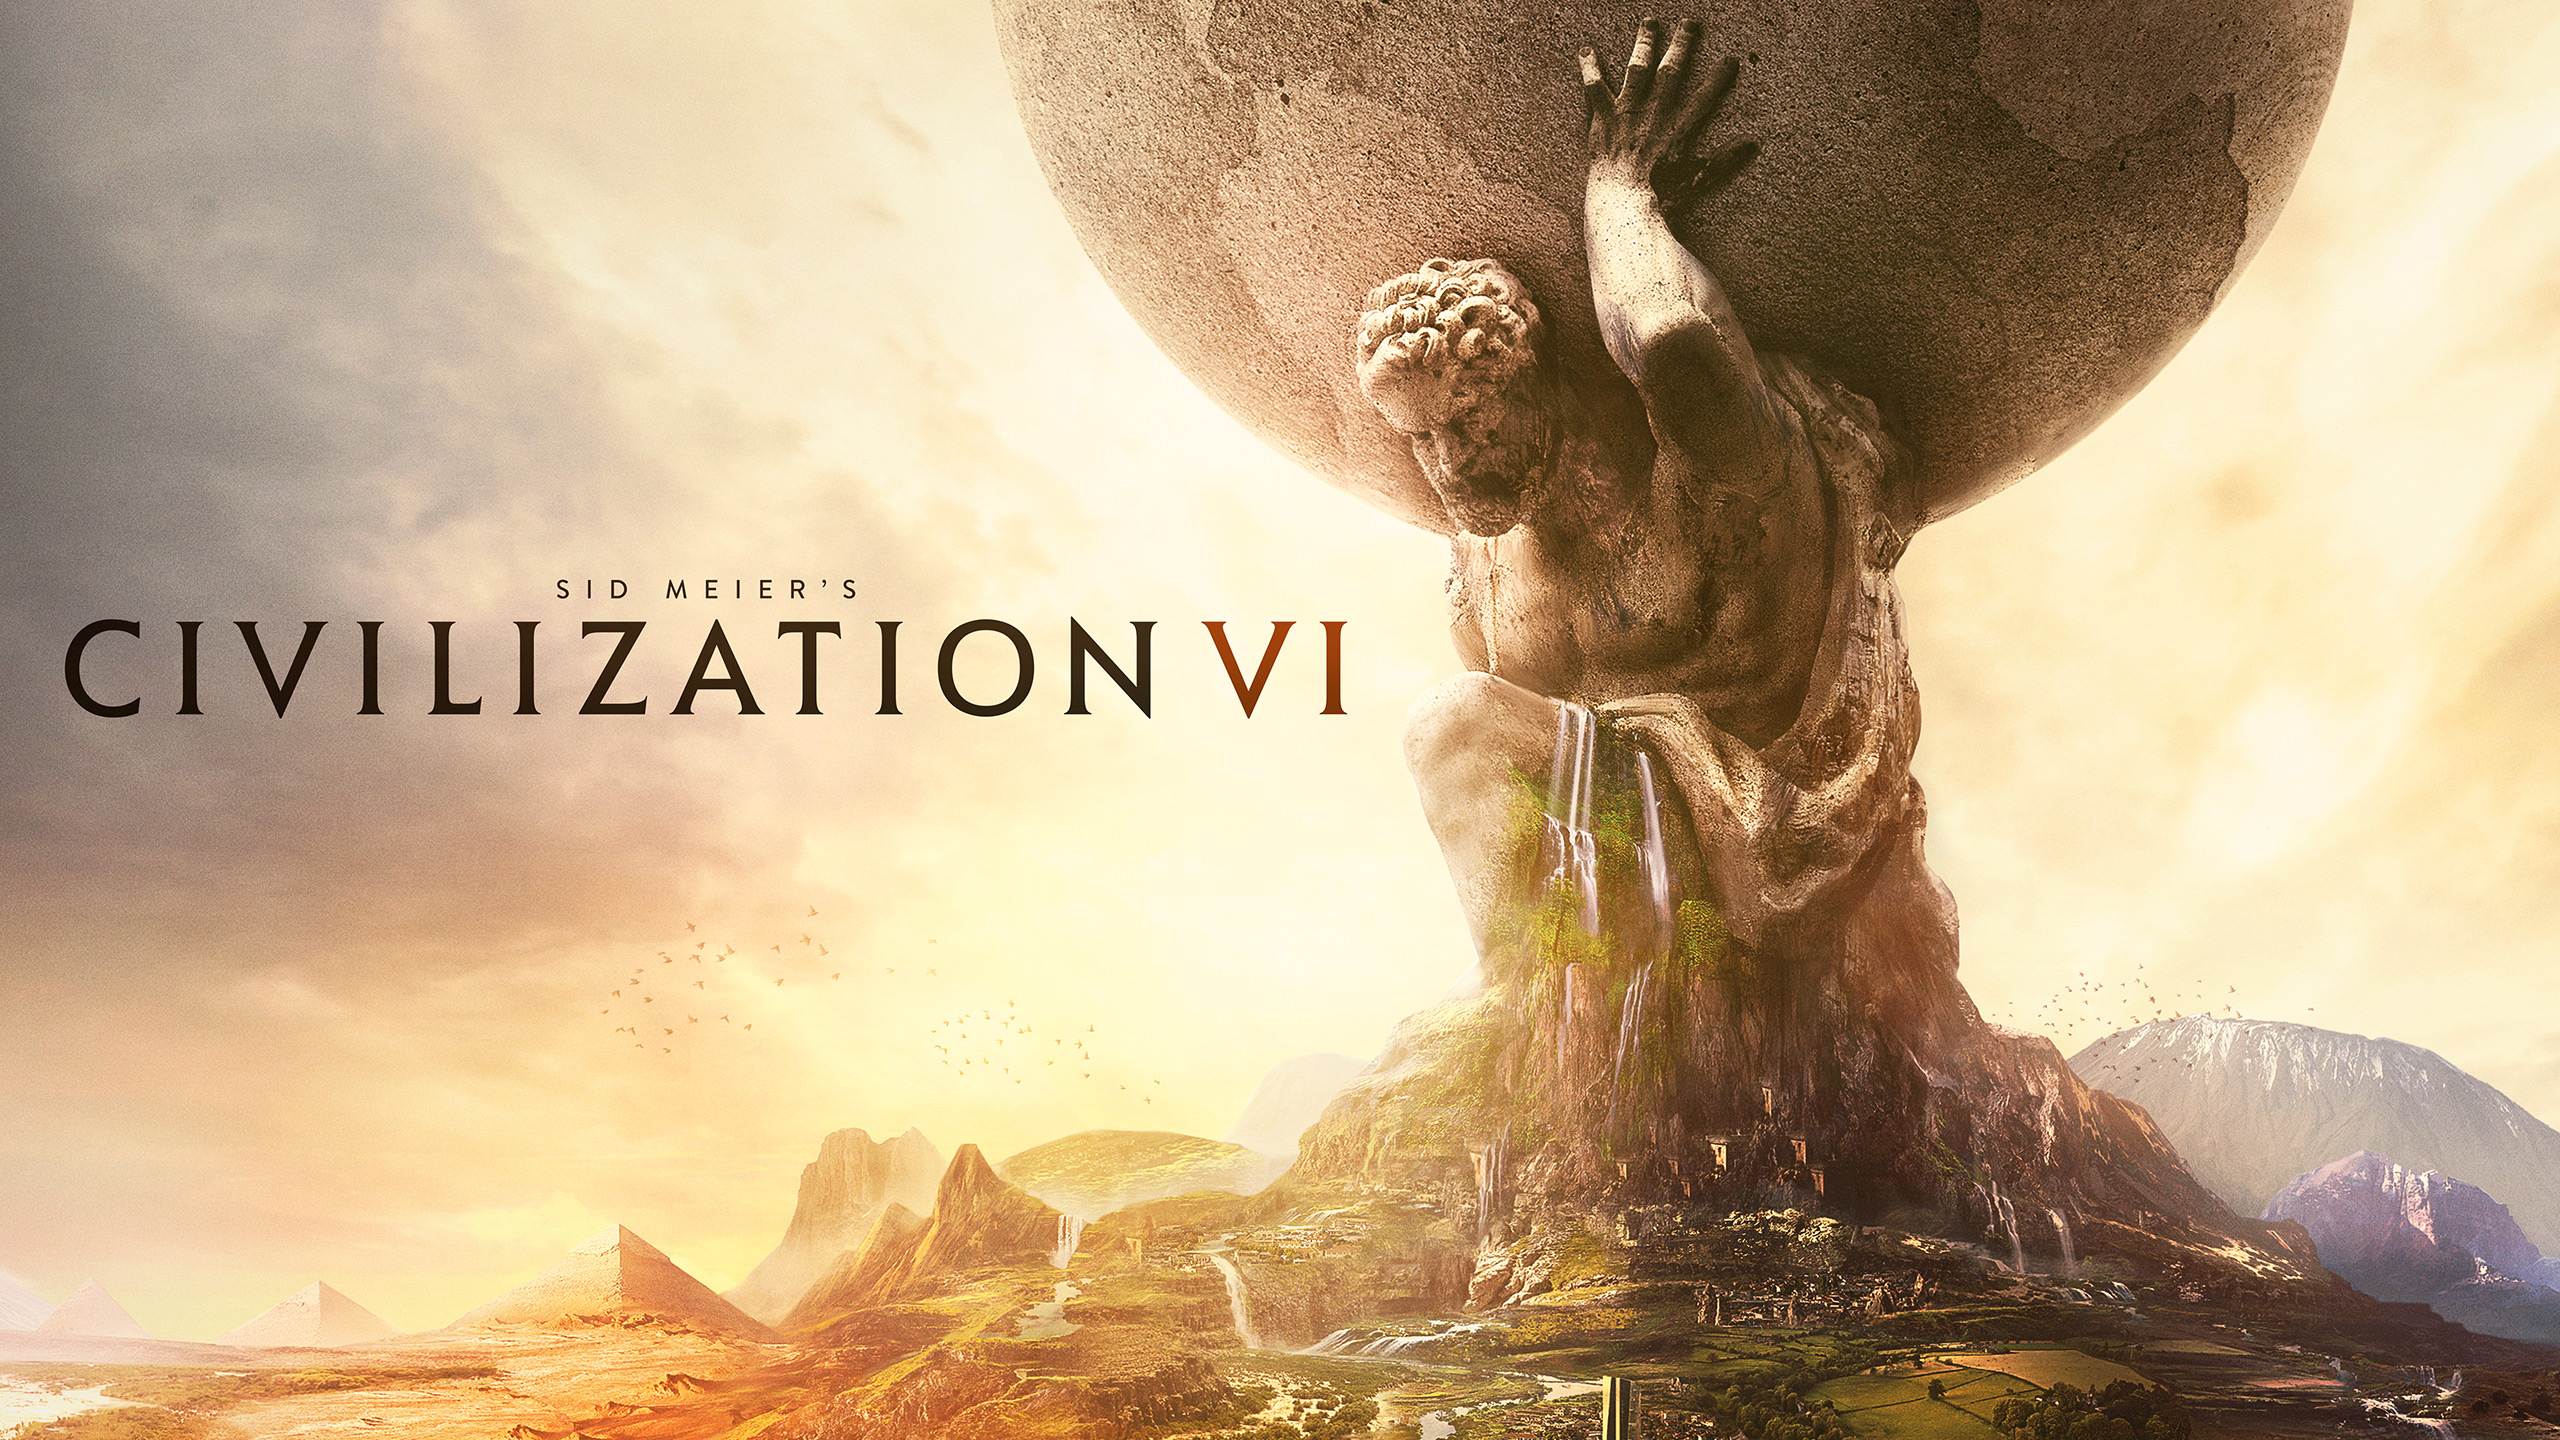 Новинка в Game Pass - игру Sid Meier's Civilization VI добавили в подписку на Xbox и PC: с сайта NEWXBOXONE.RU